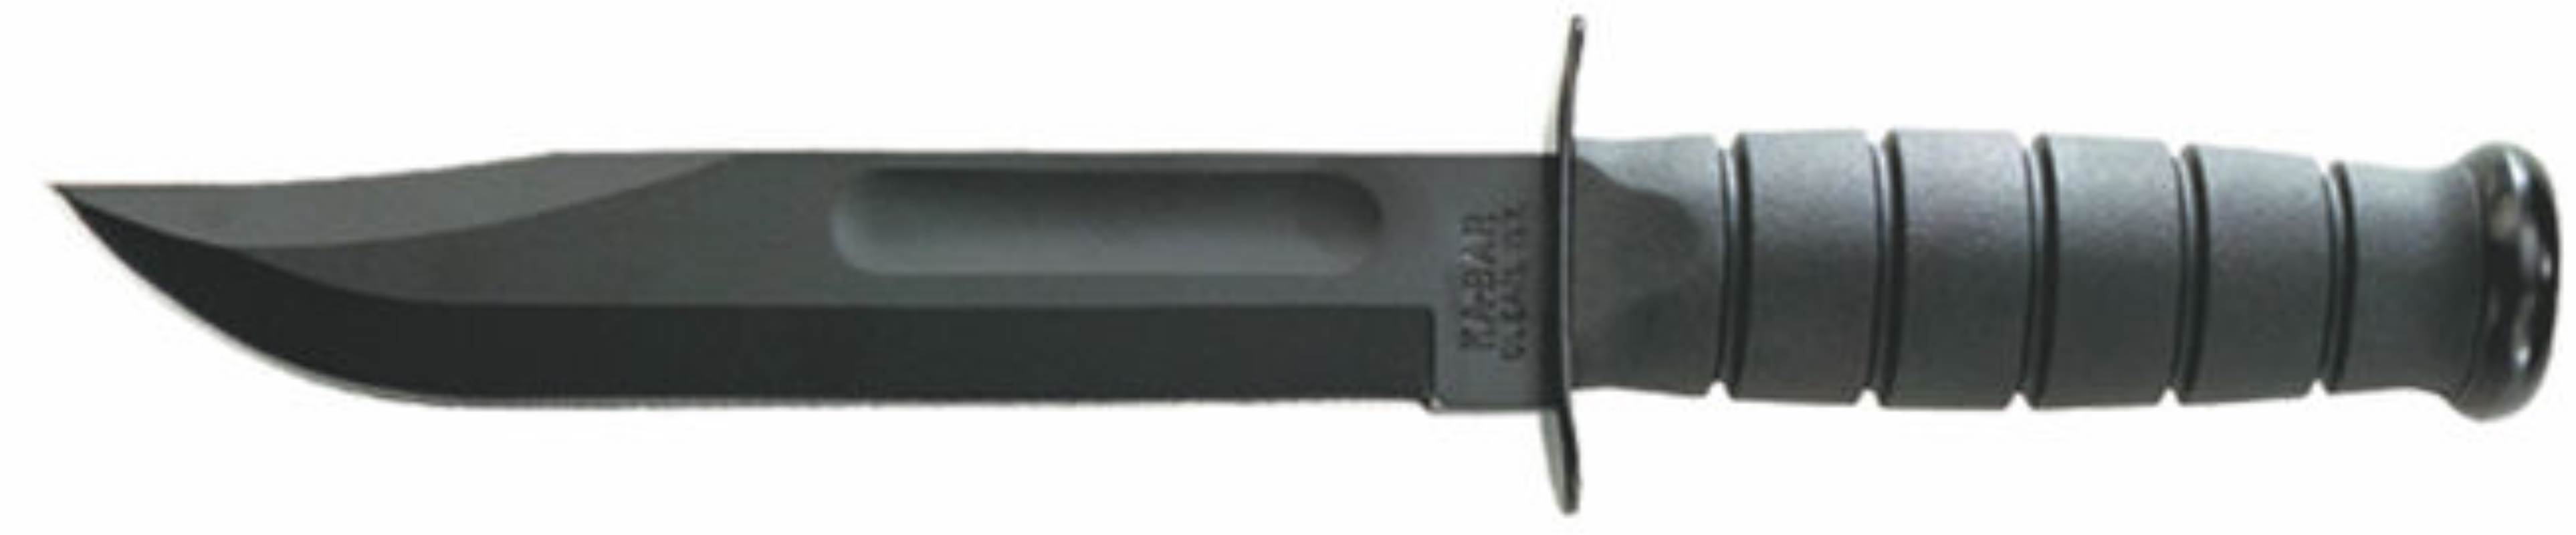 Black Fixed Blade Knife